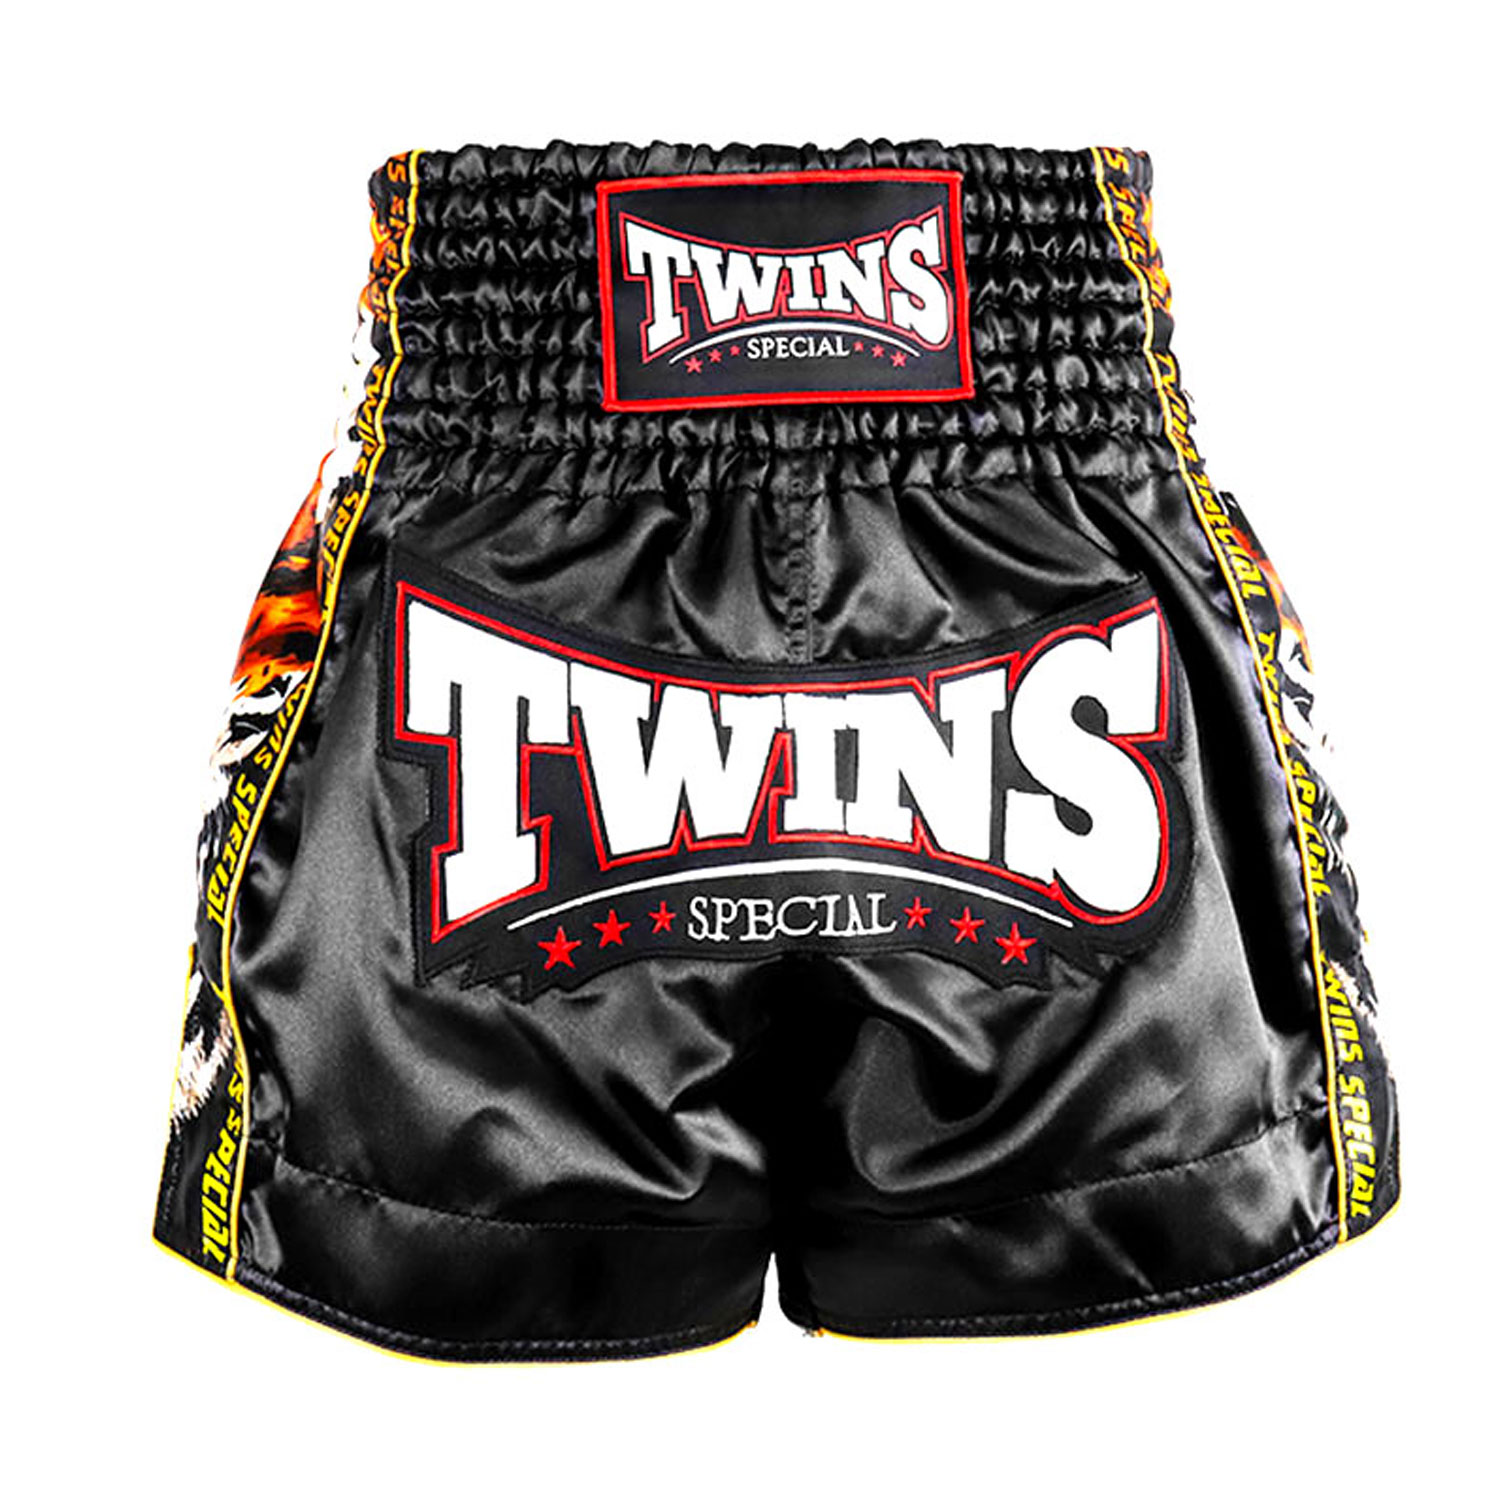 Twins Muay Thai Payak Fight Shorts - Click Image to Close